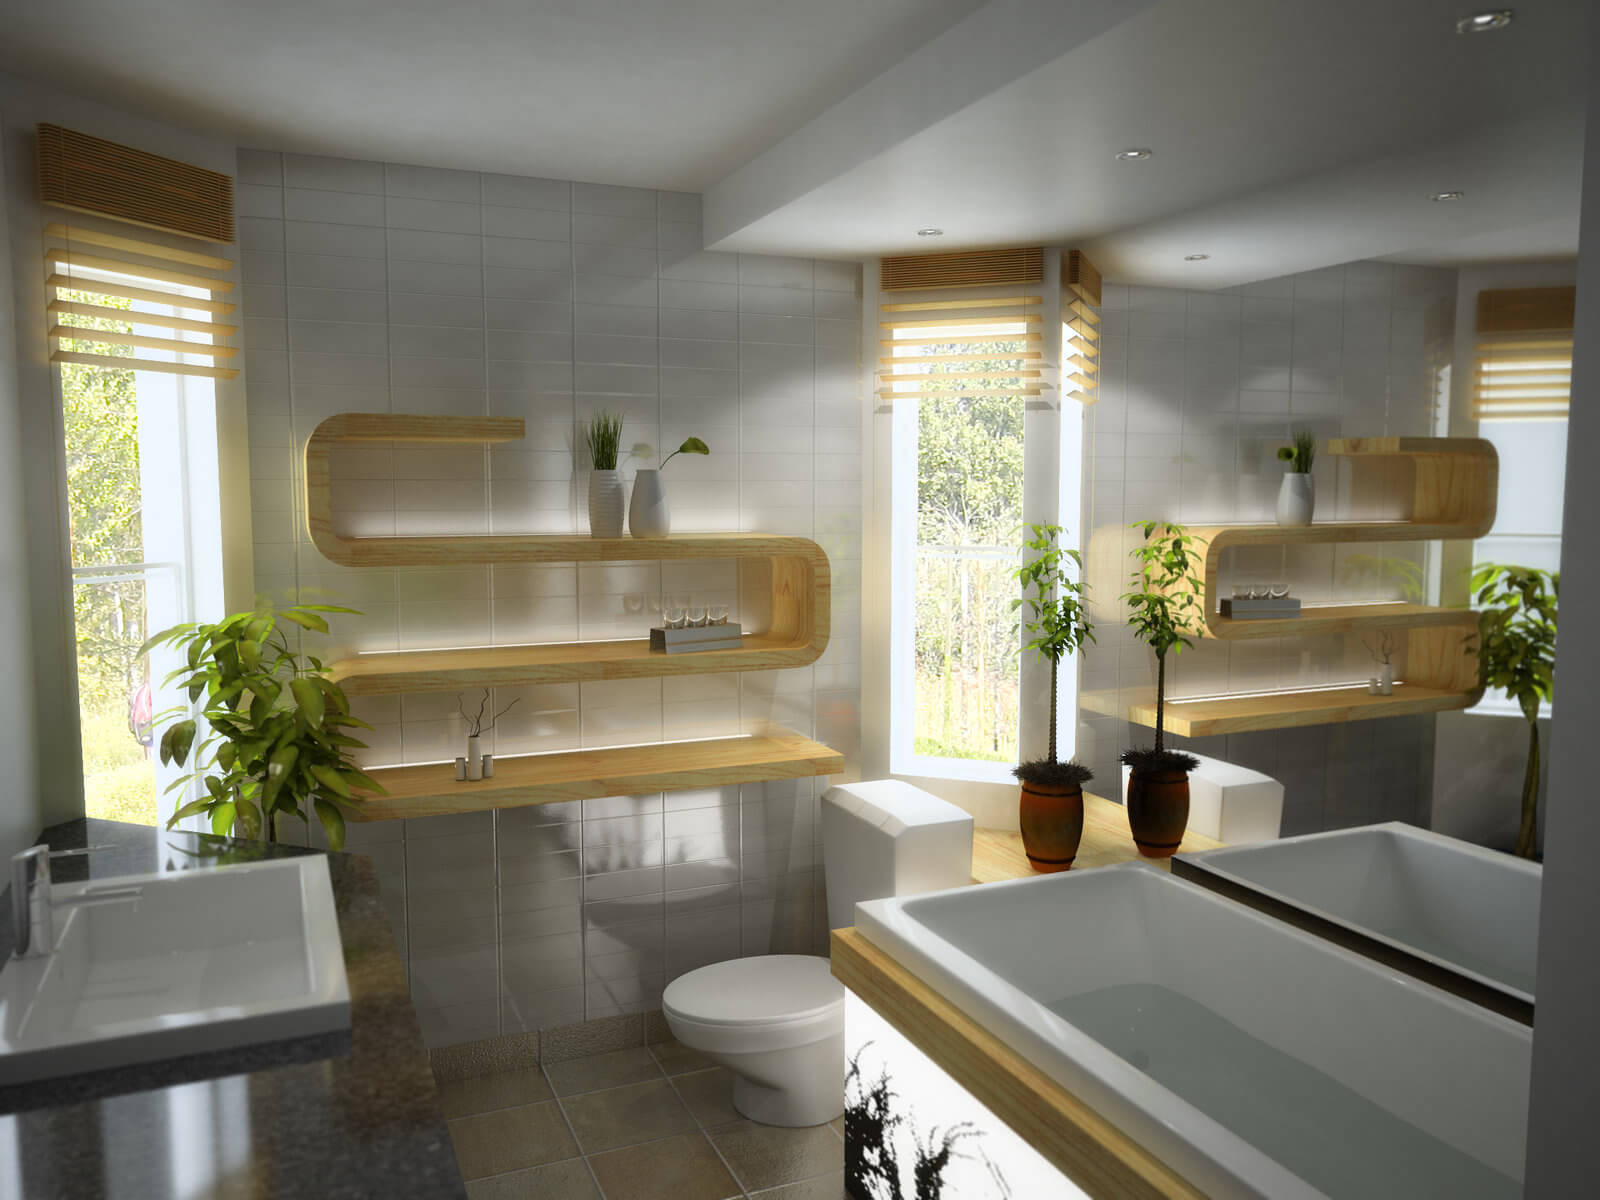 20 Examples of Innovative Bathroom Designs Interior Design, Design